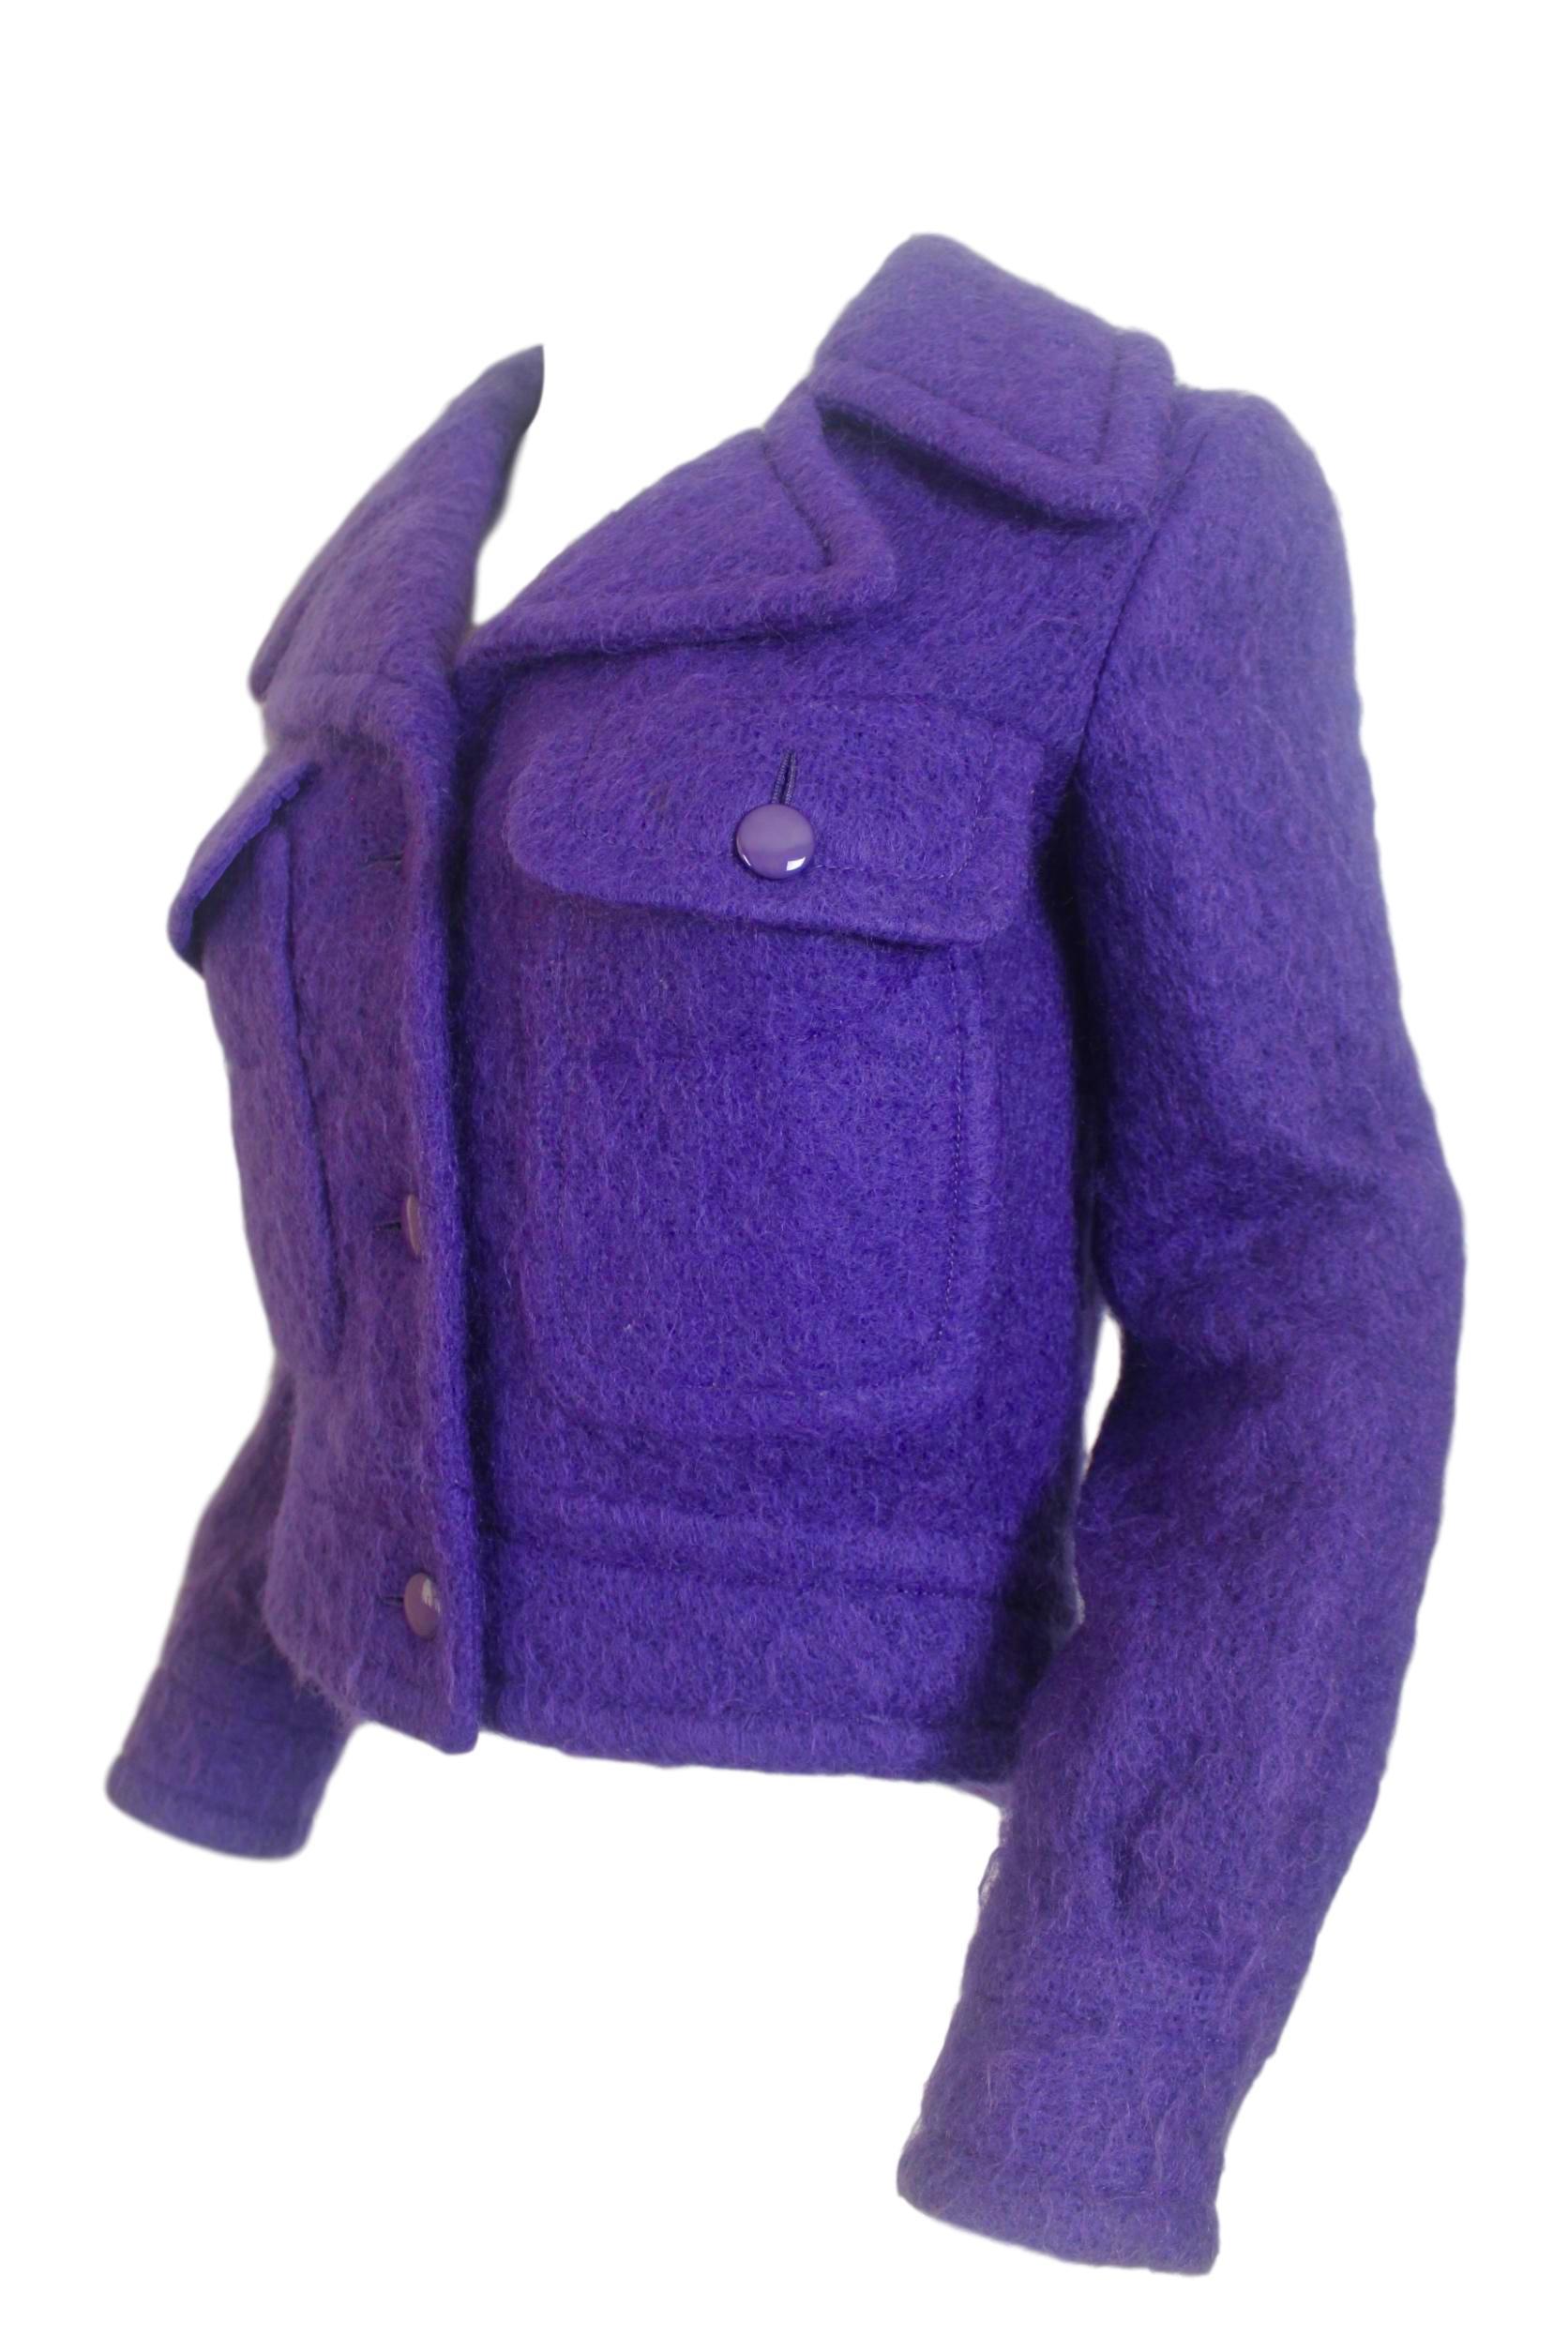 Pierre Cardin 1960s Mohair Jacket For Sale 6